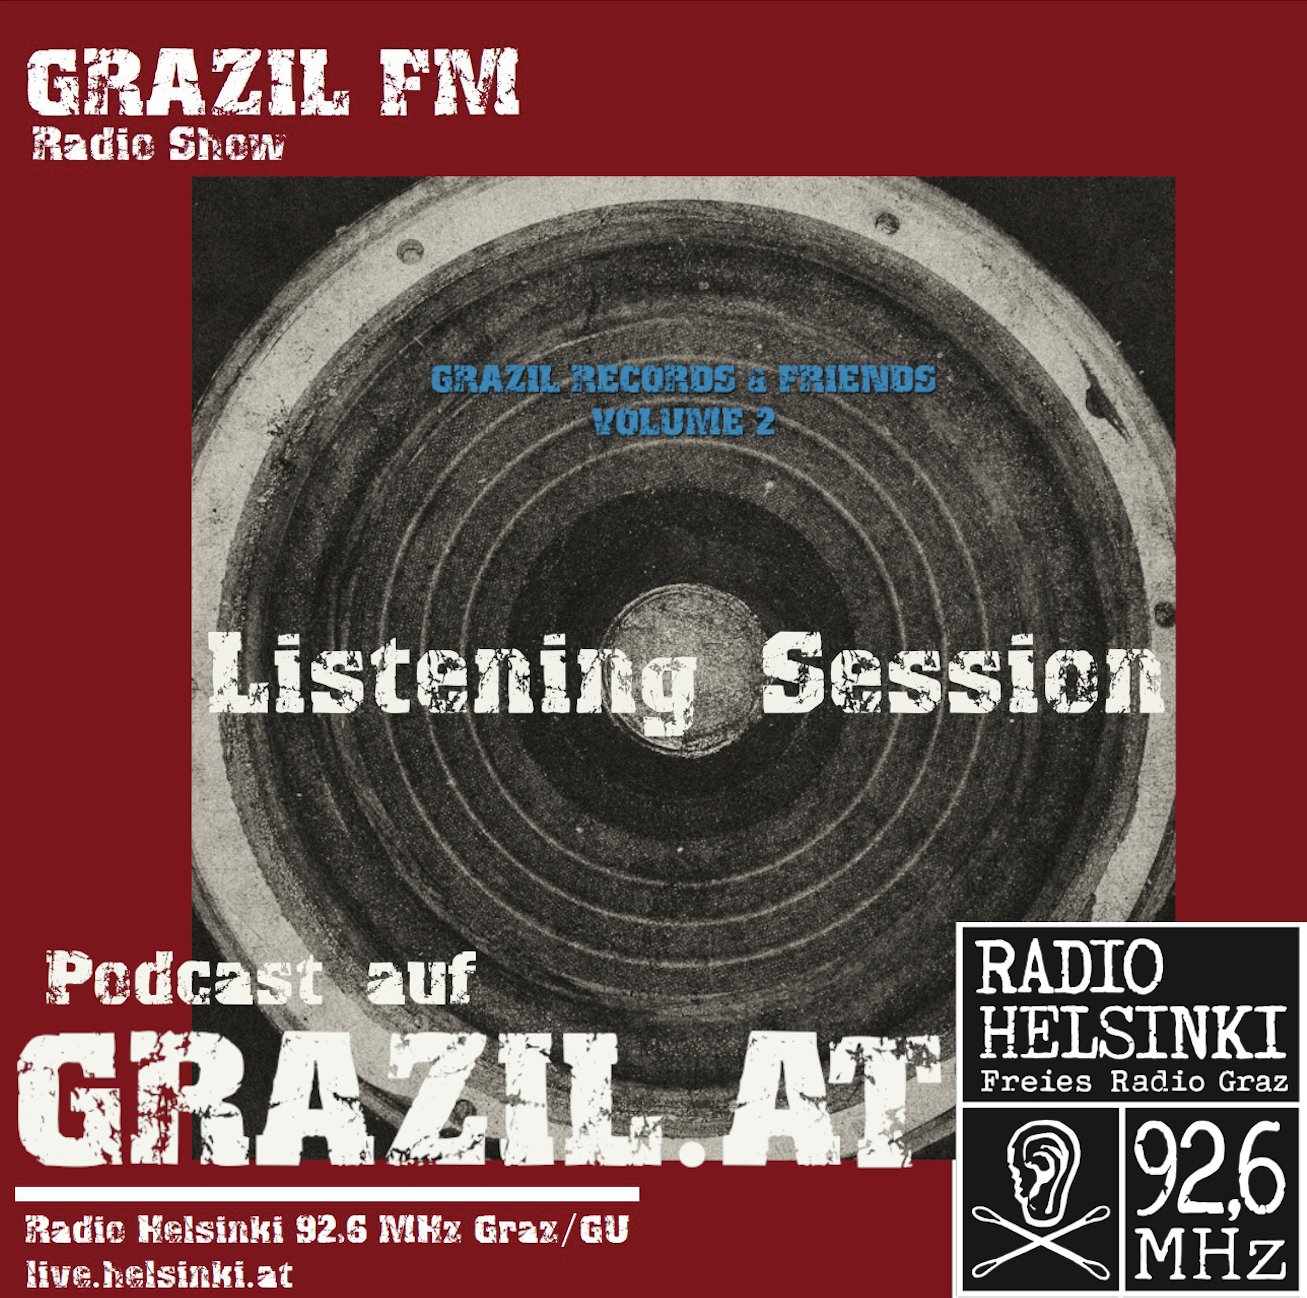 grazil Records and Friends Volume 2 Listening Session Radio Helsinki